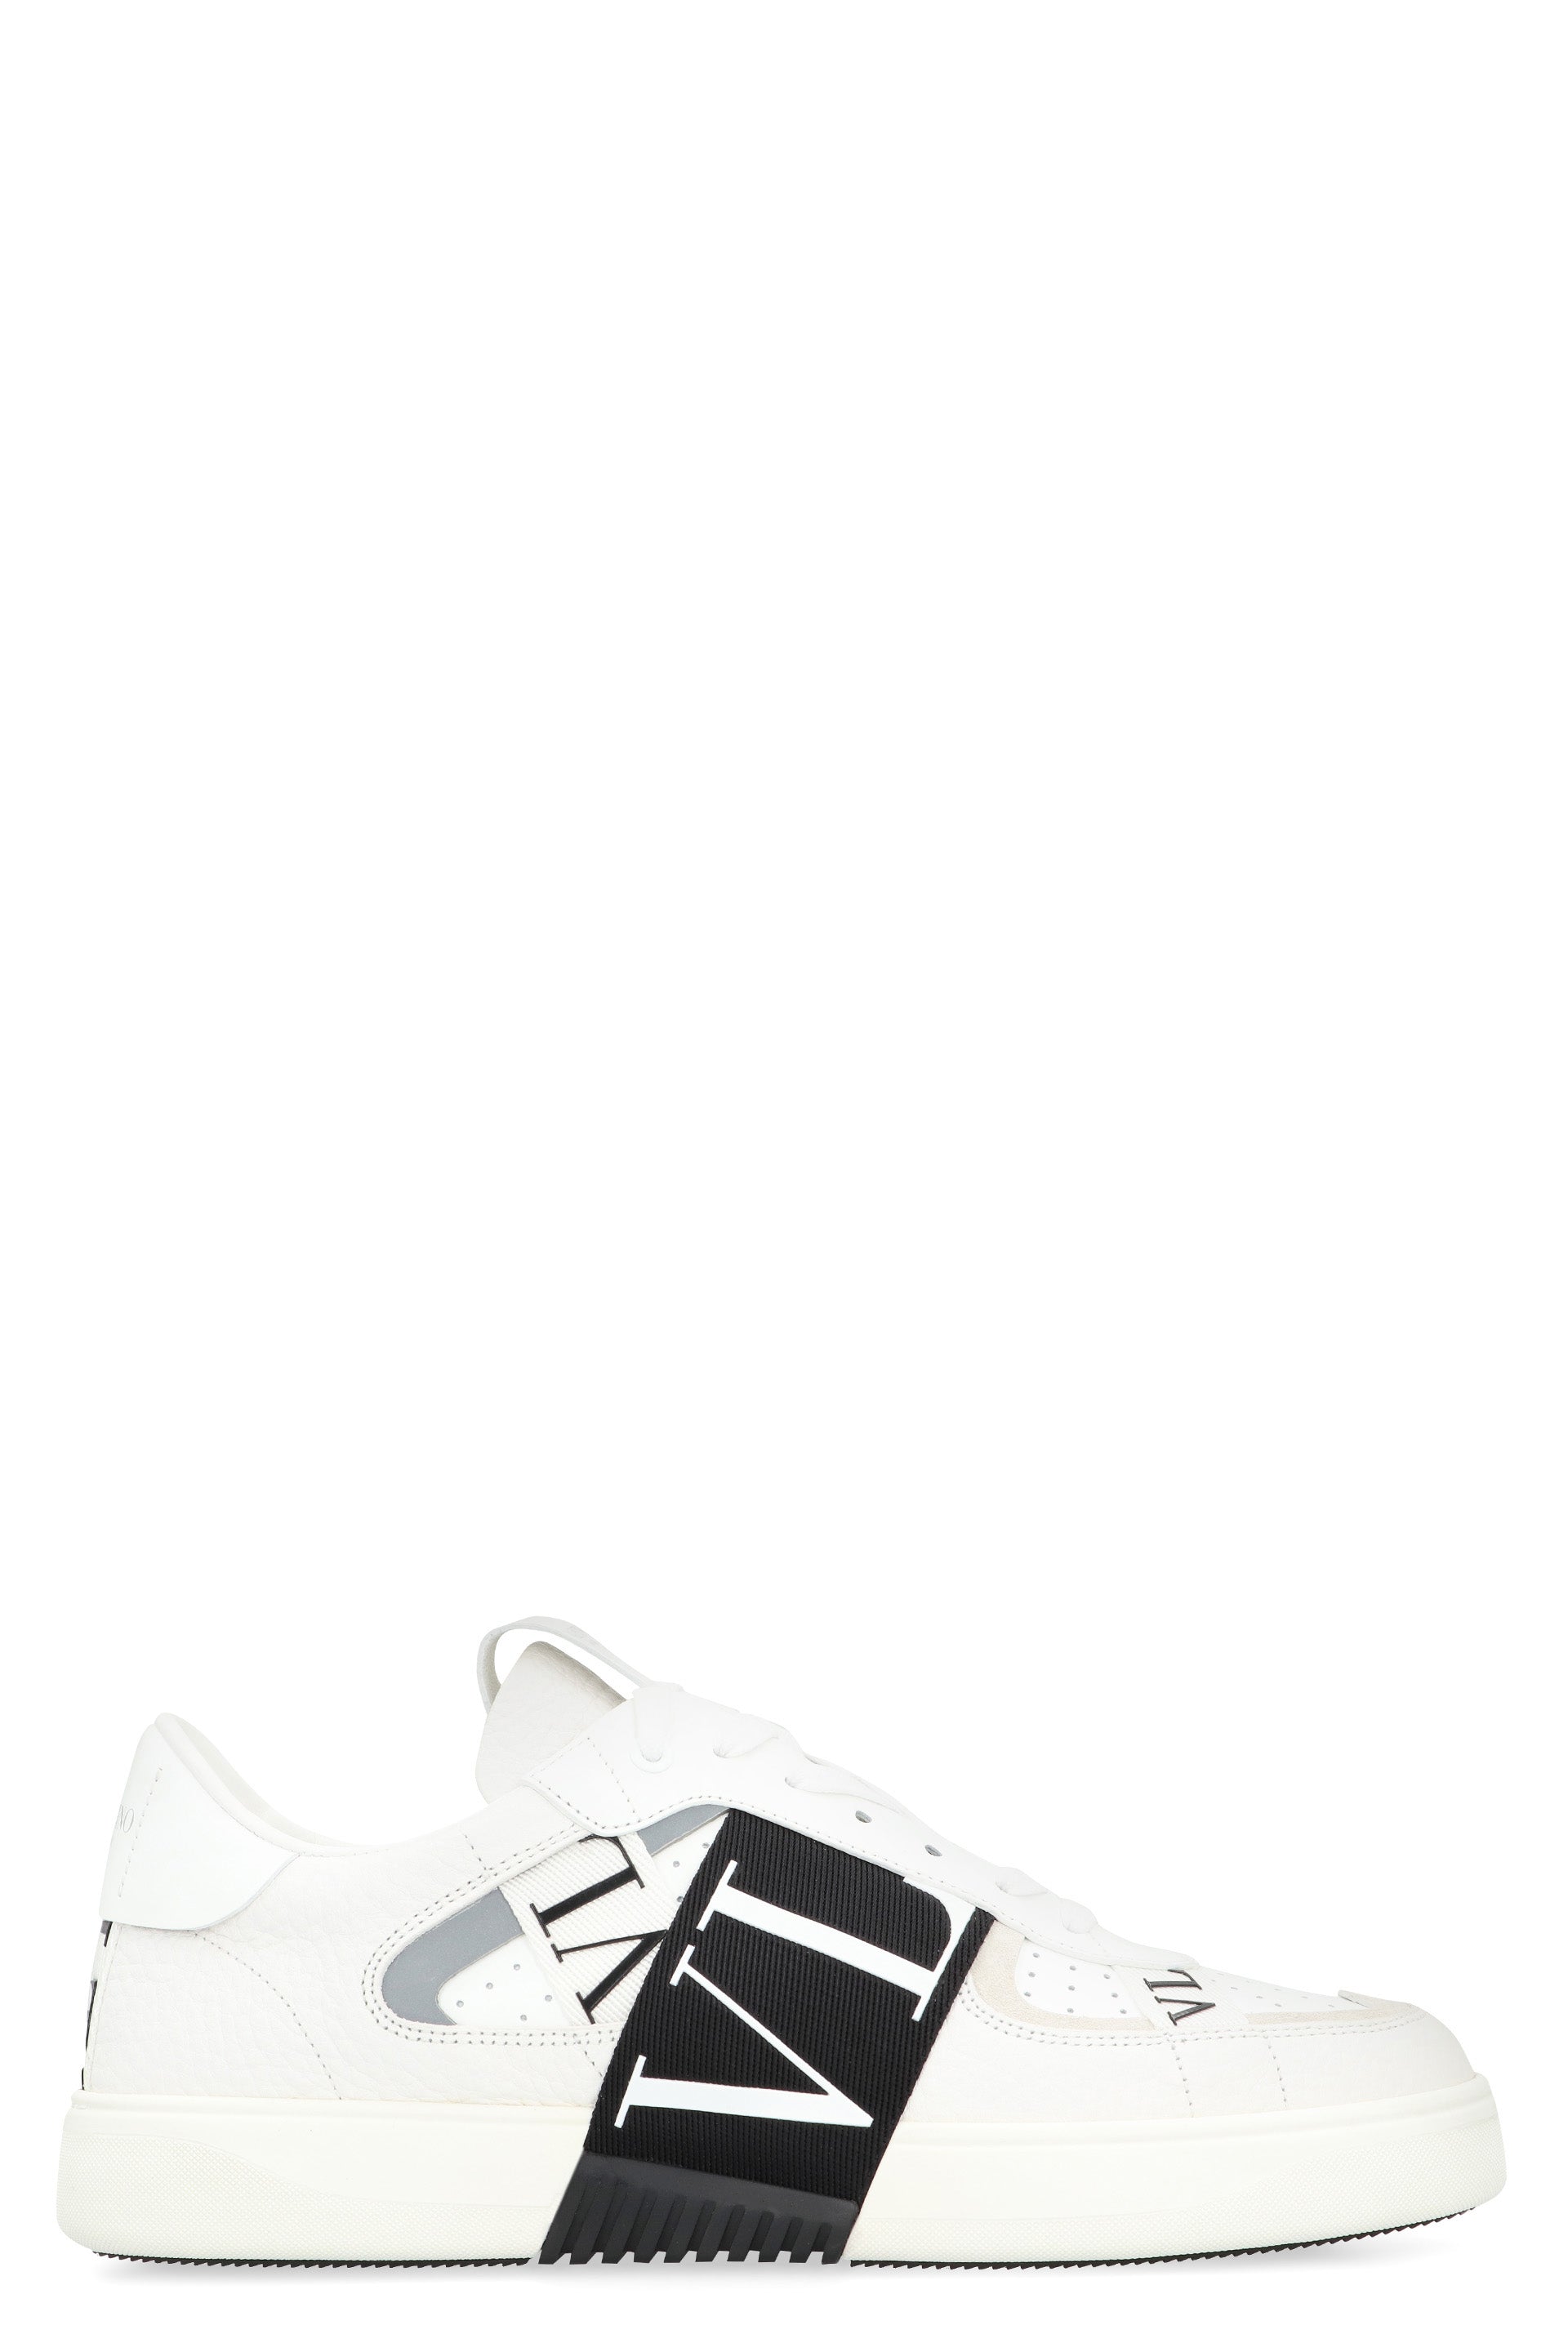 Valentino Garavani Sleek White Low-top Sneakers For Men